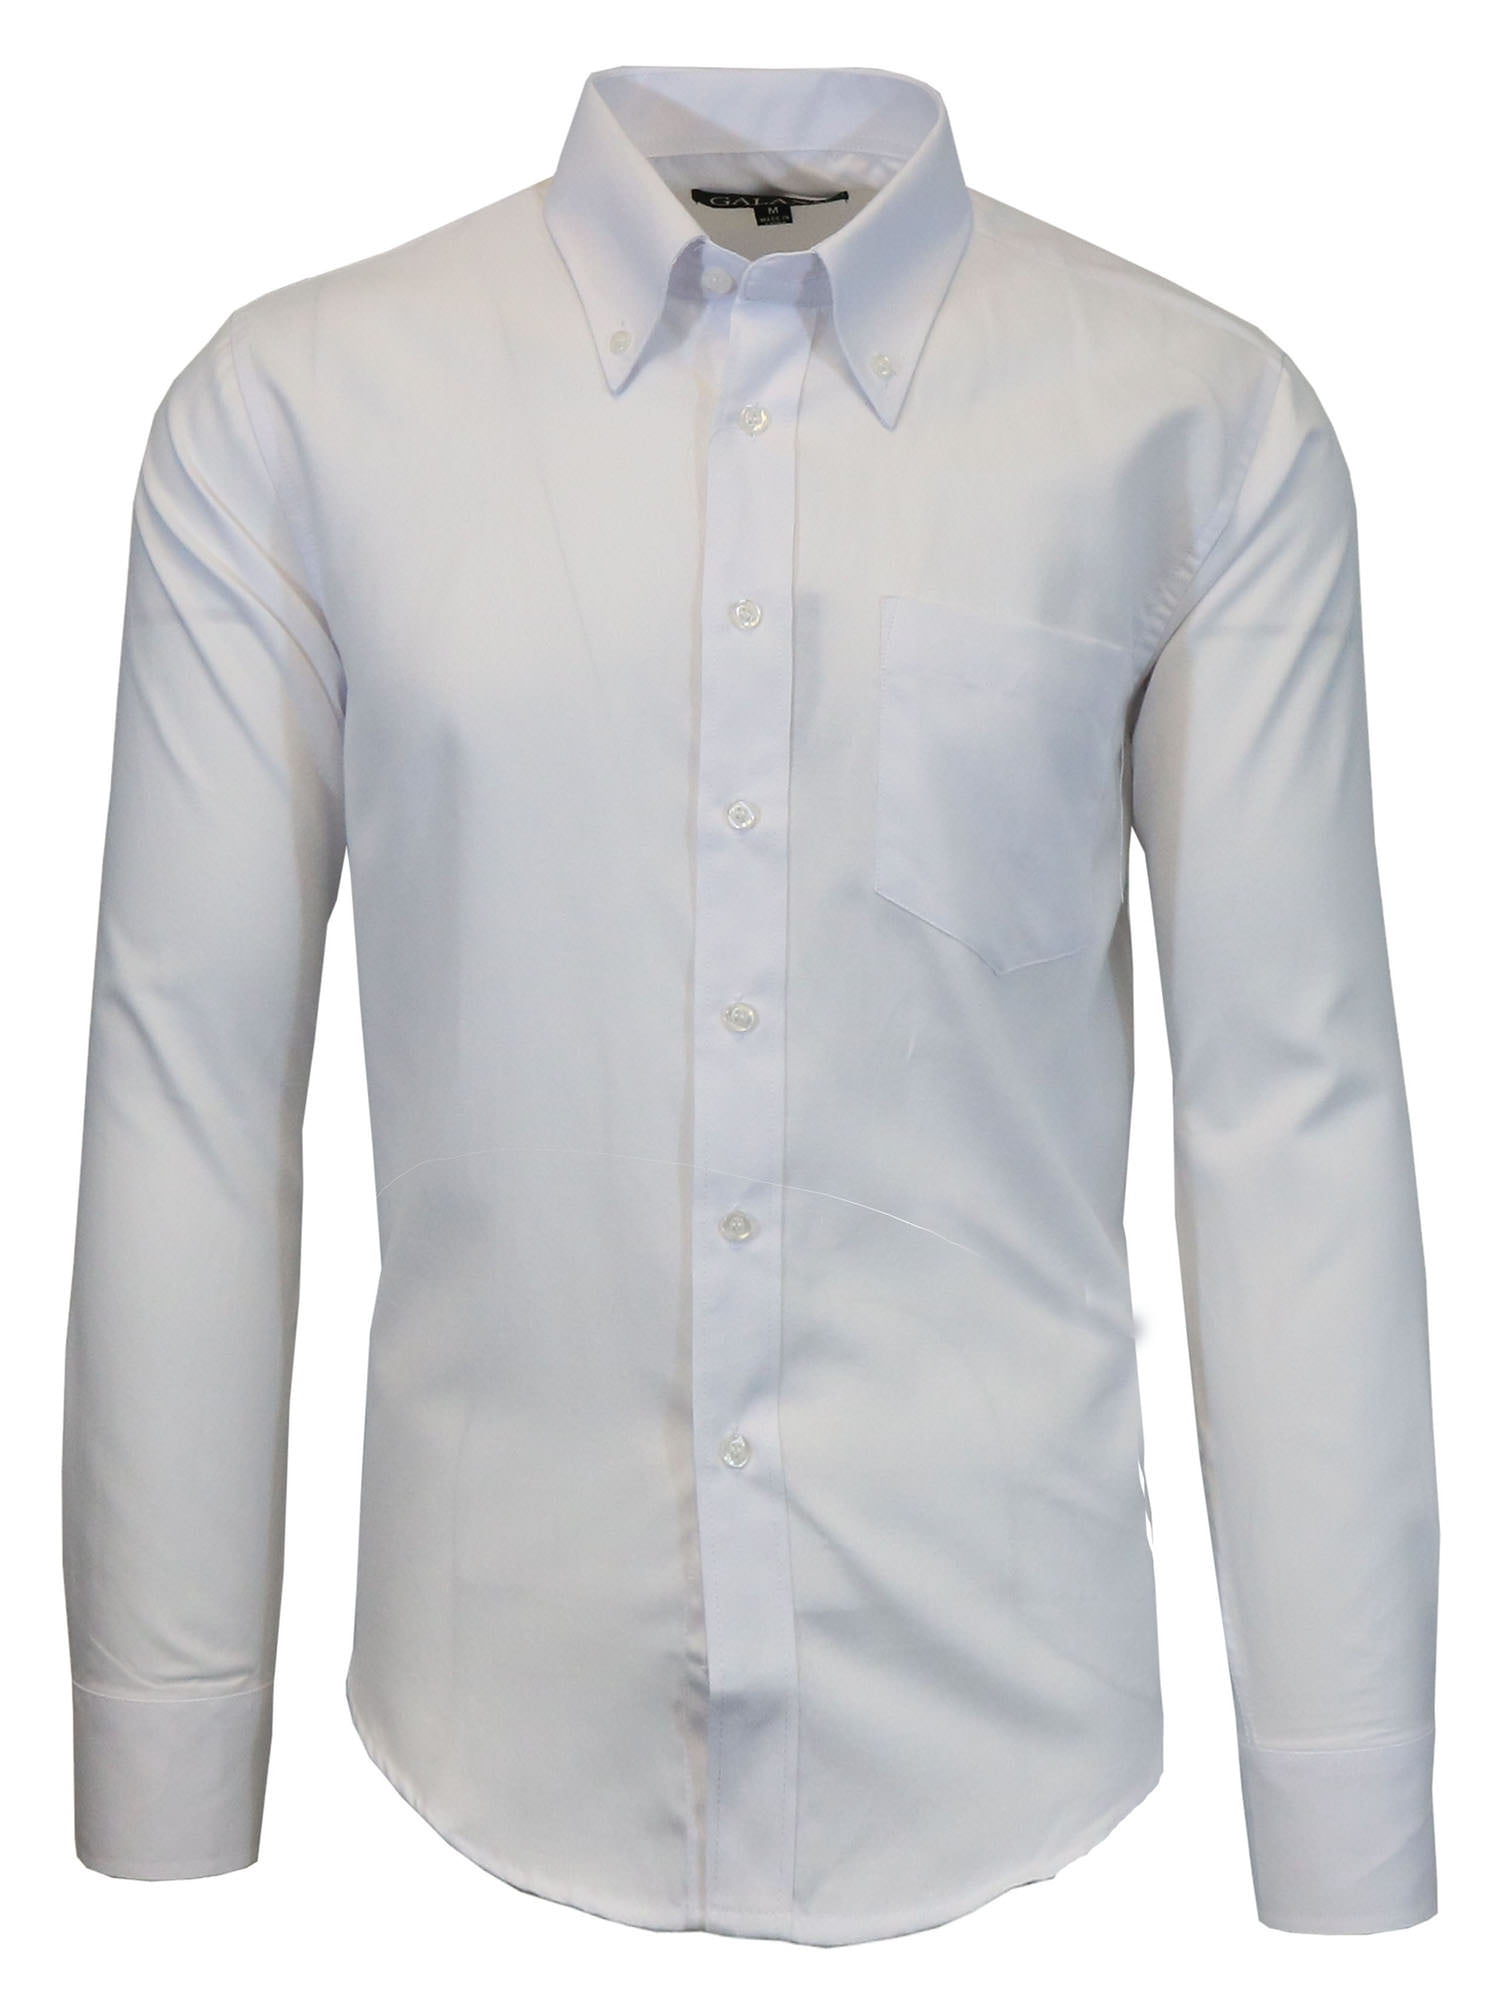 Mens Long Sleeve Oxford Dress Shirt White Casual Button Down - Walmart.com